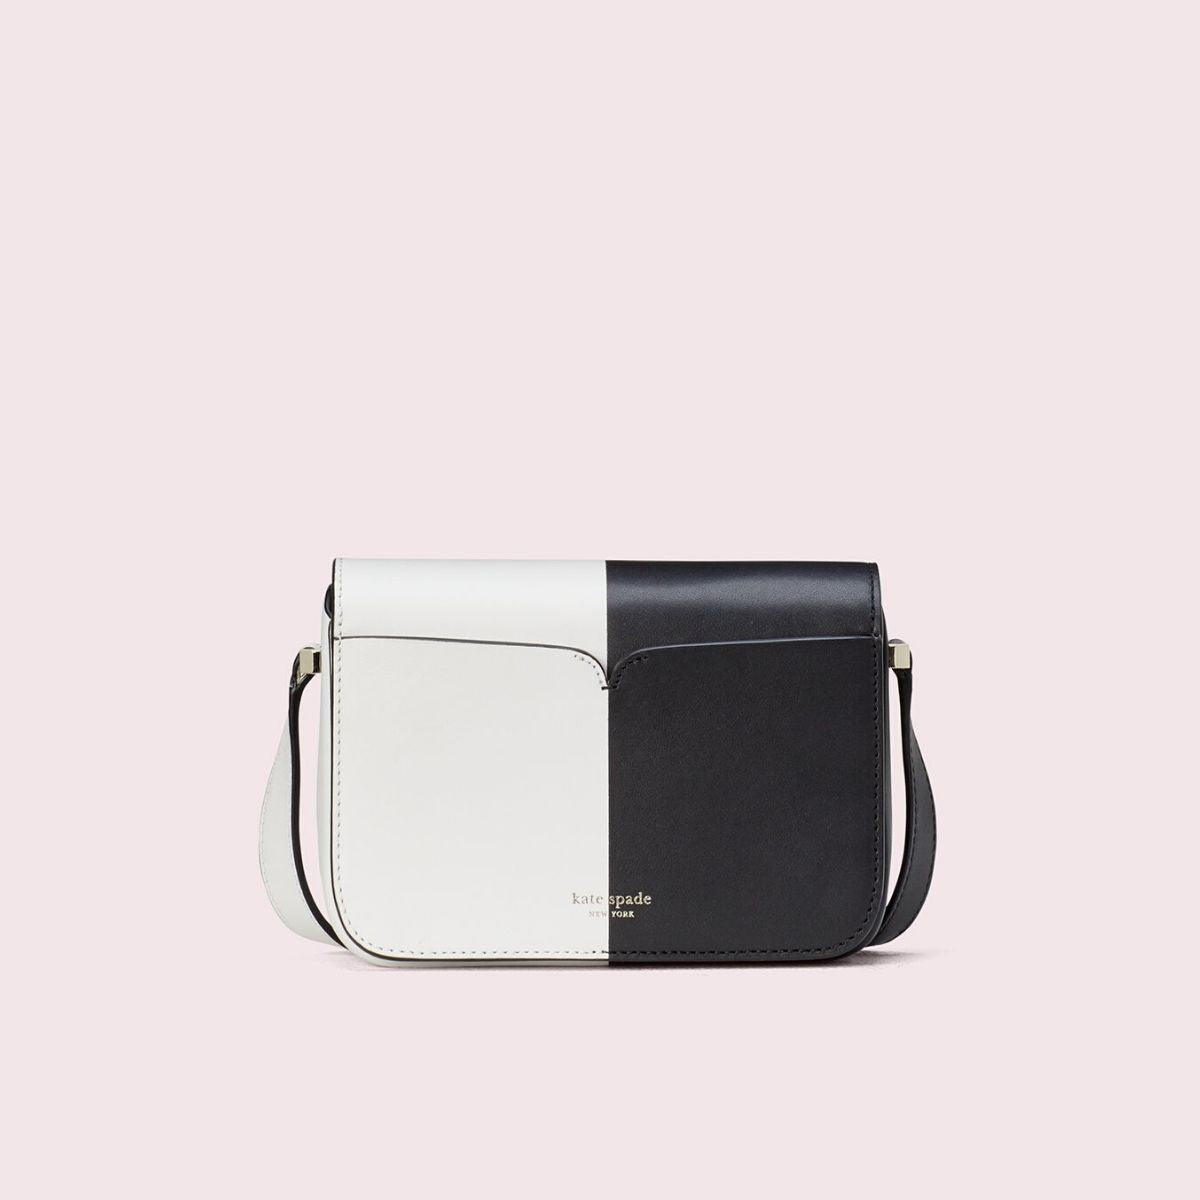 Nicola Bicolor Twistlock Small Black and Optic White Shoulder Bag